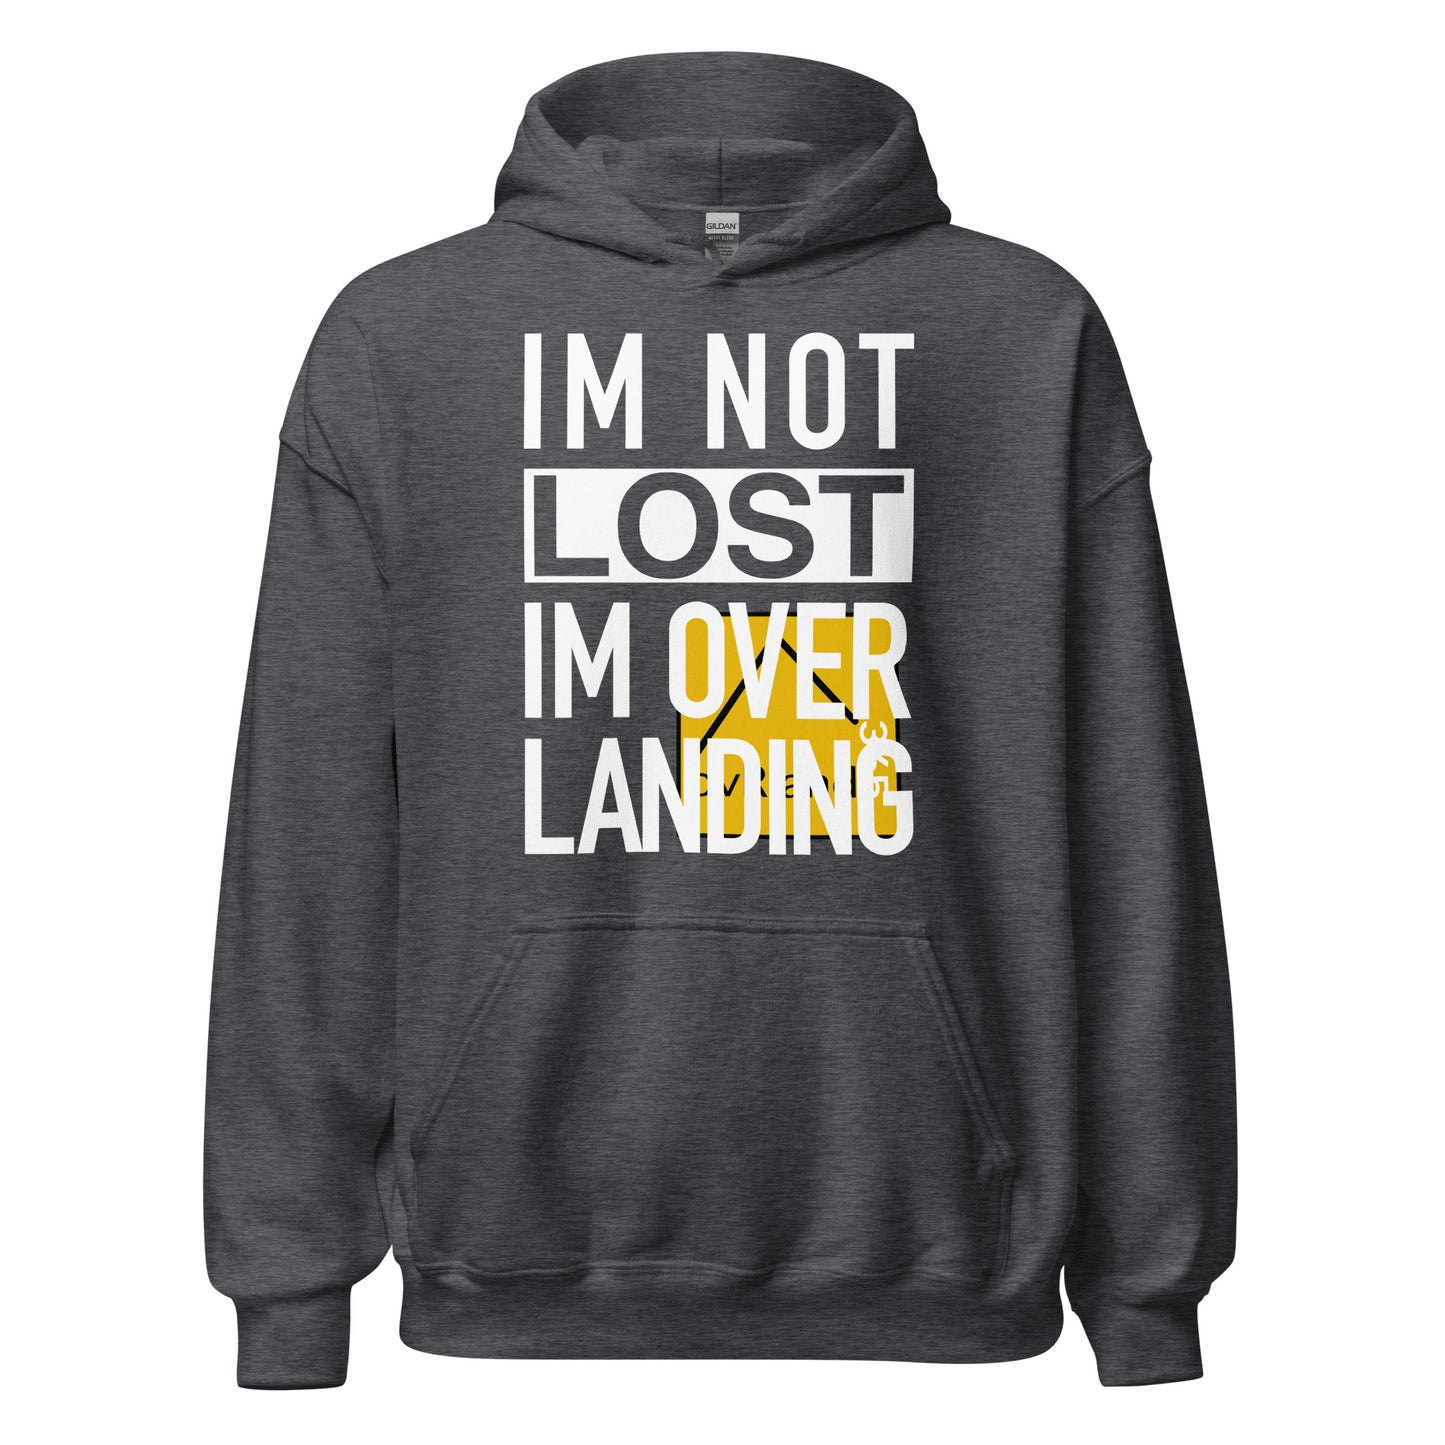 IM NOT LOST IM OVER LANDING - dark grey hoodie with misprint logo. overland365.com